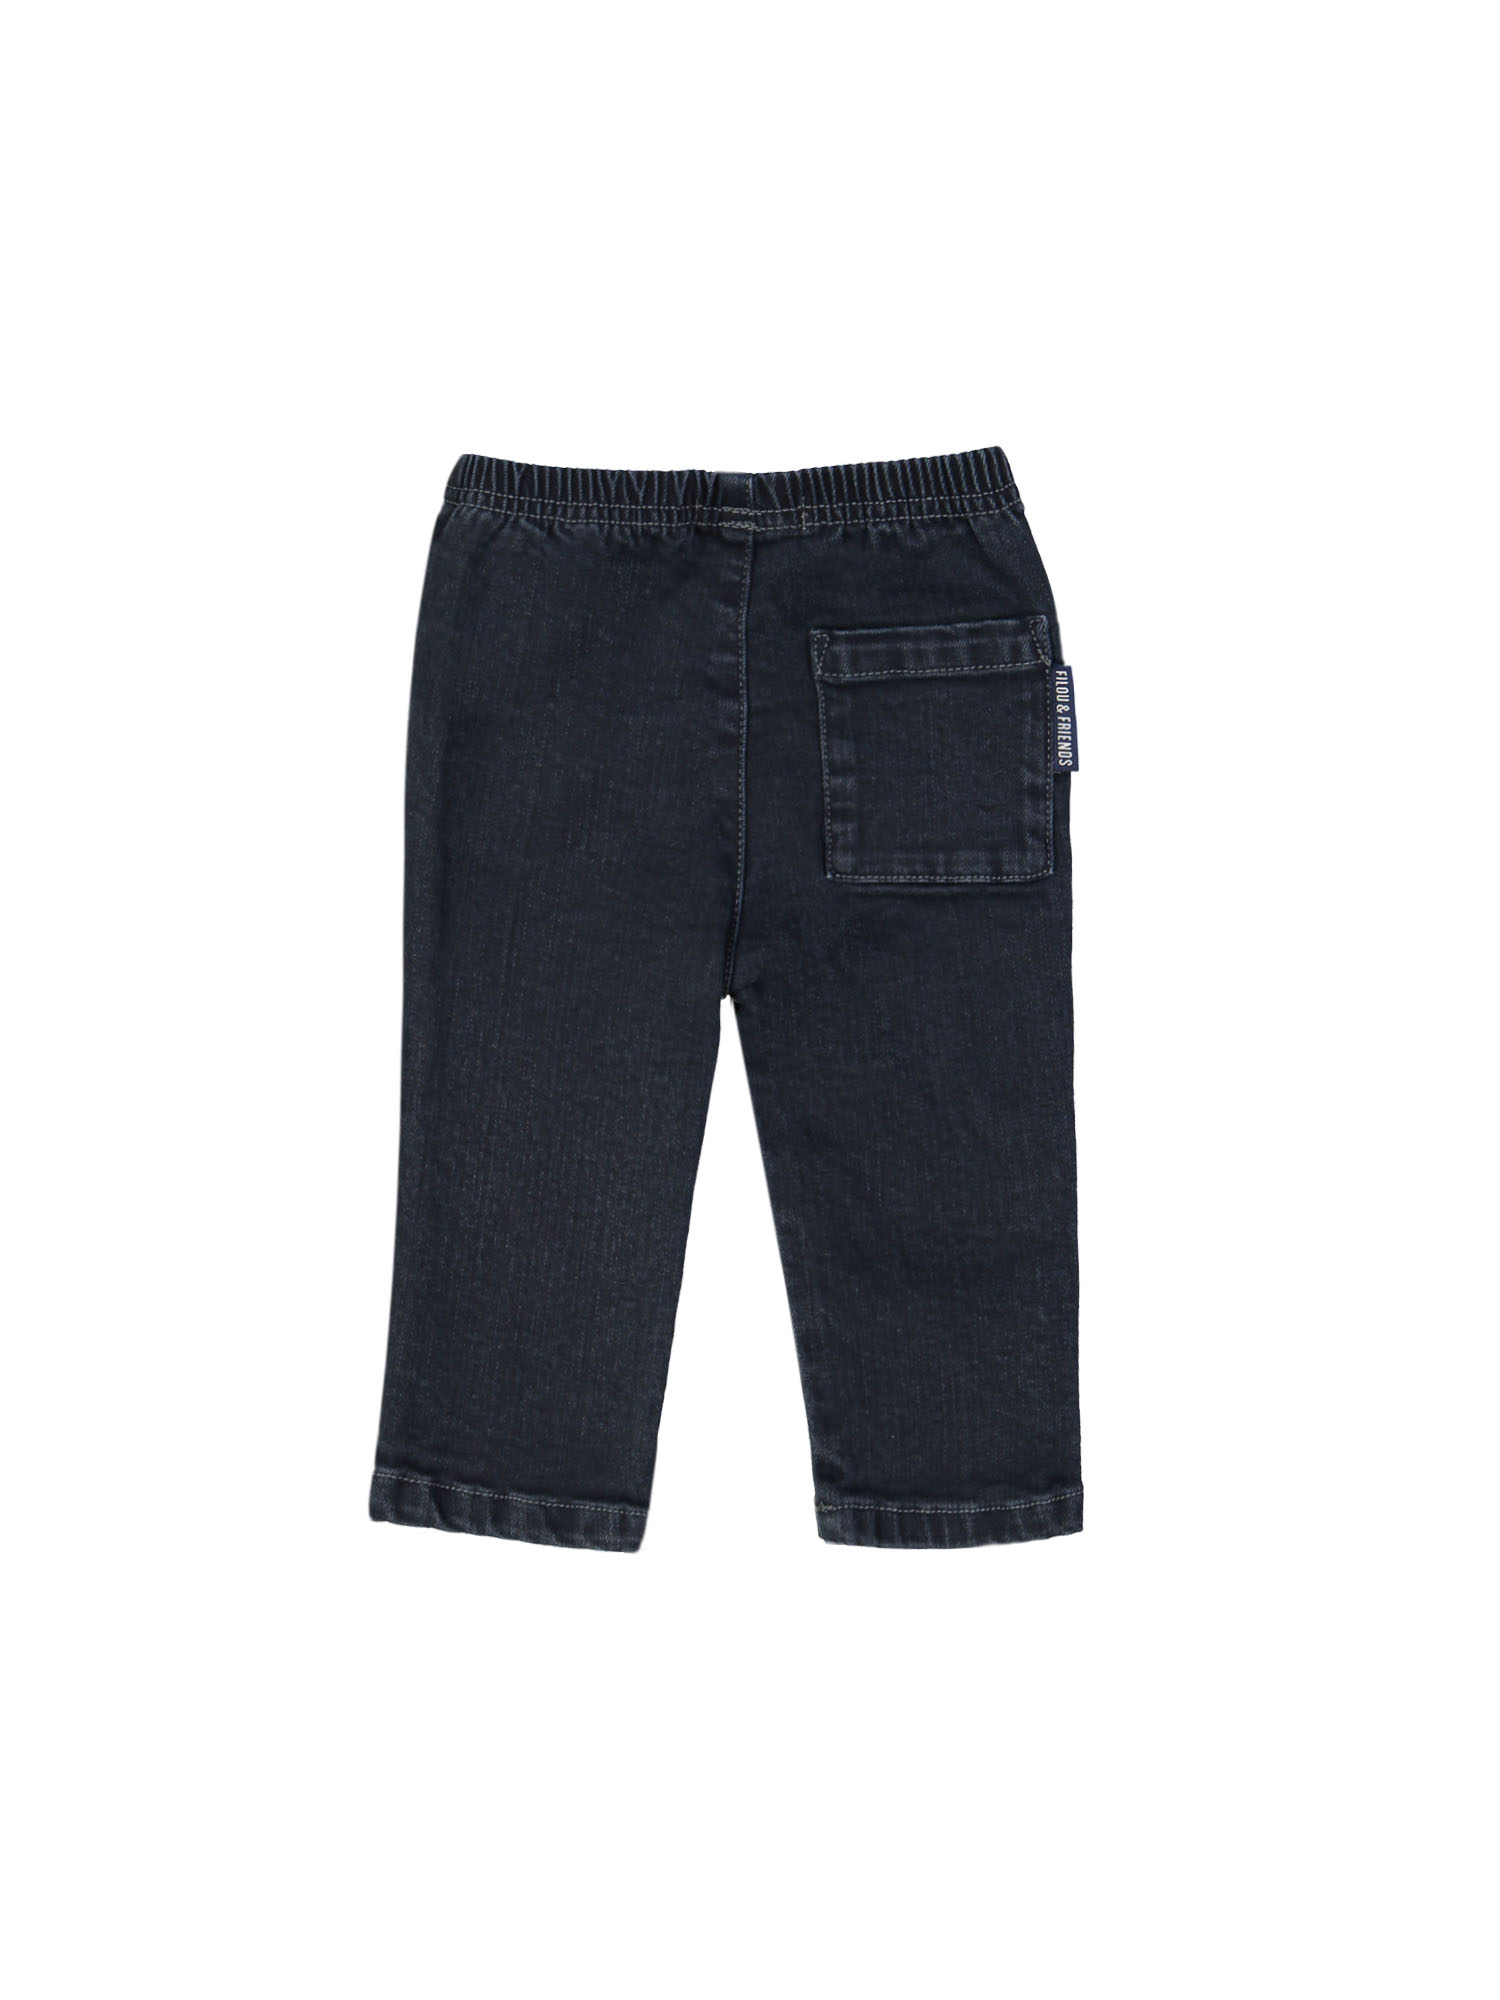 comfy broek mini jeans contrast blauw blauw 03m